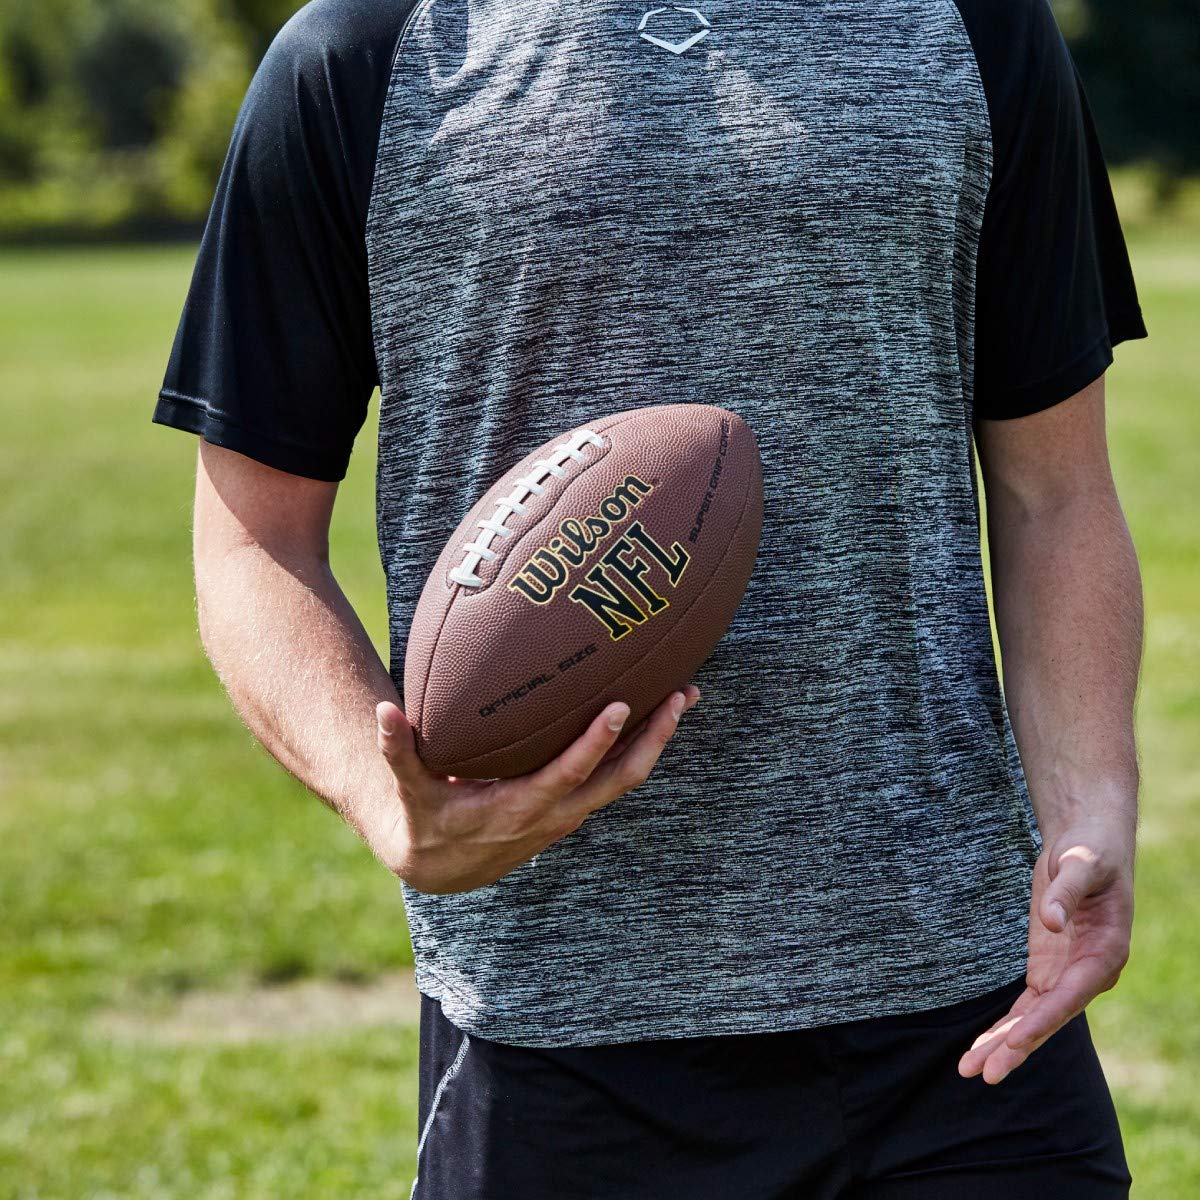 Wilson NFL Super Grip Composite Football - Junior Size, Brown